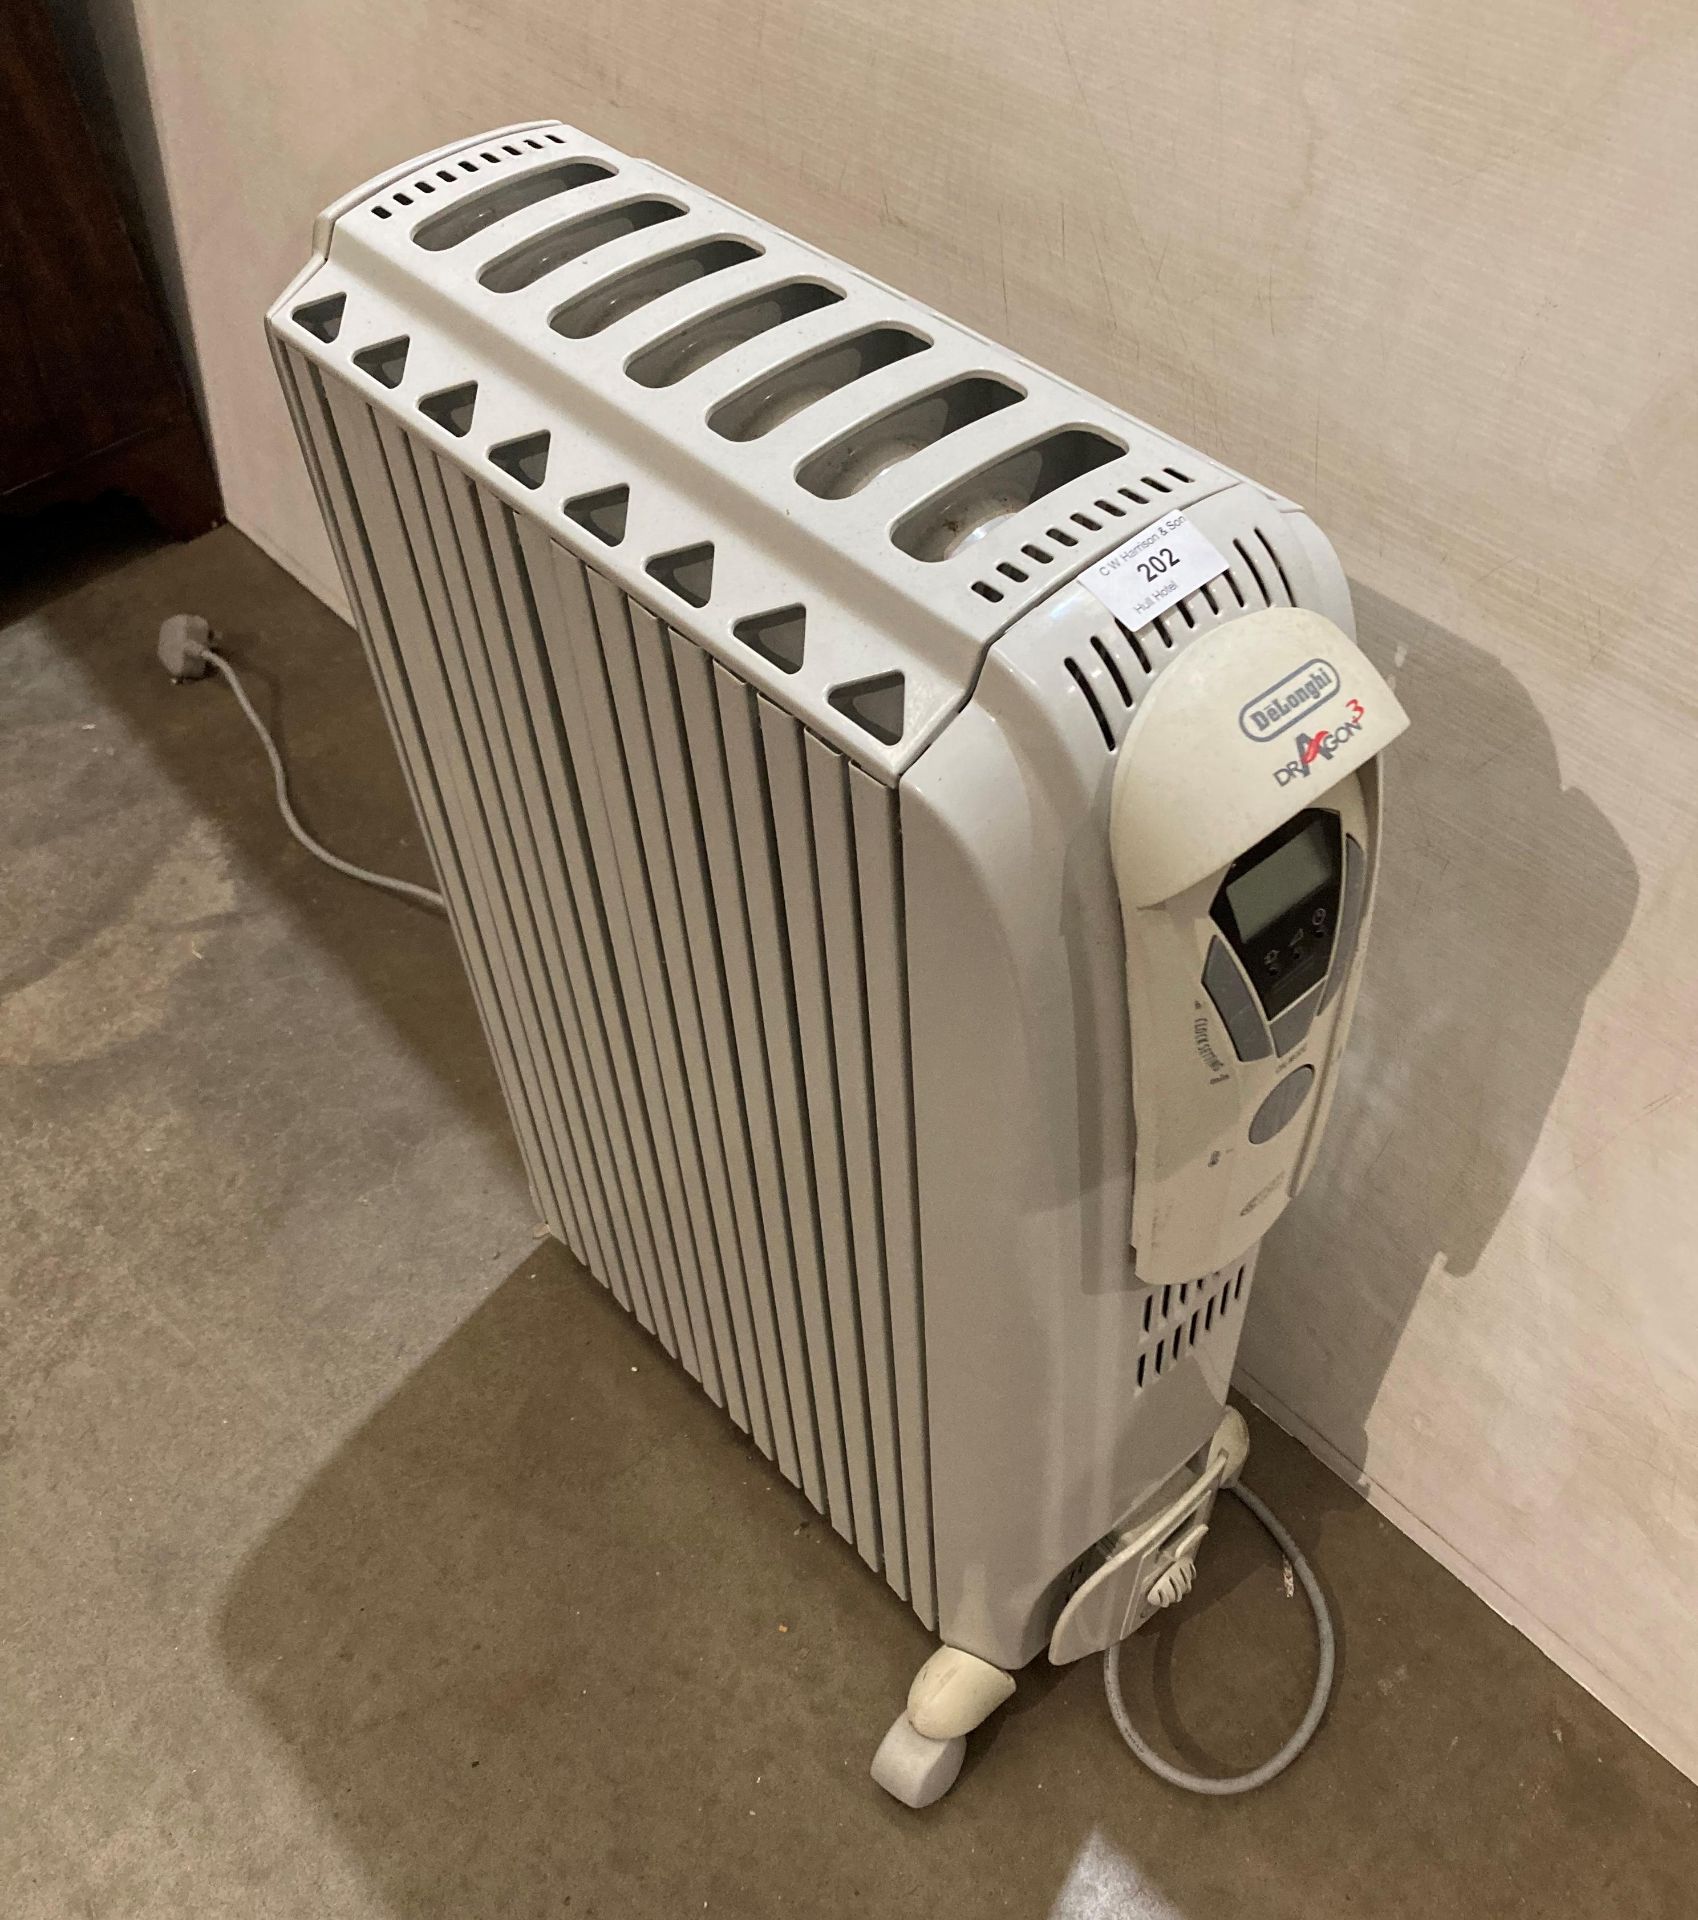 DeLonghi Dragon 3 electric oil-filled radiator (240v) (saleroom location: MA3) - Image 2 of 2